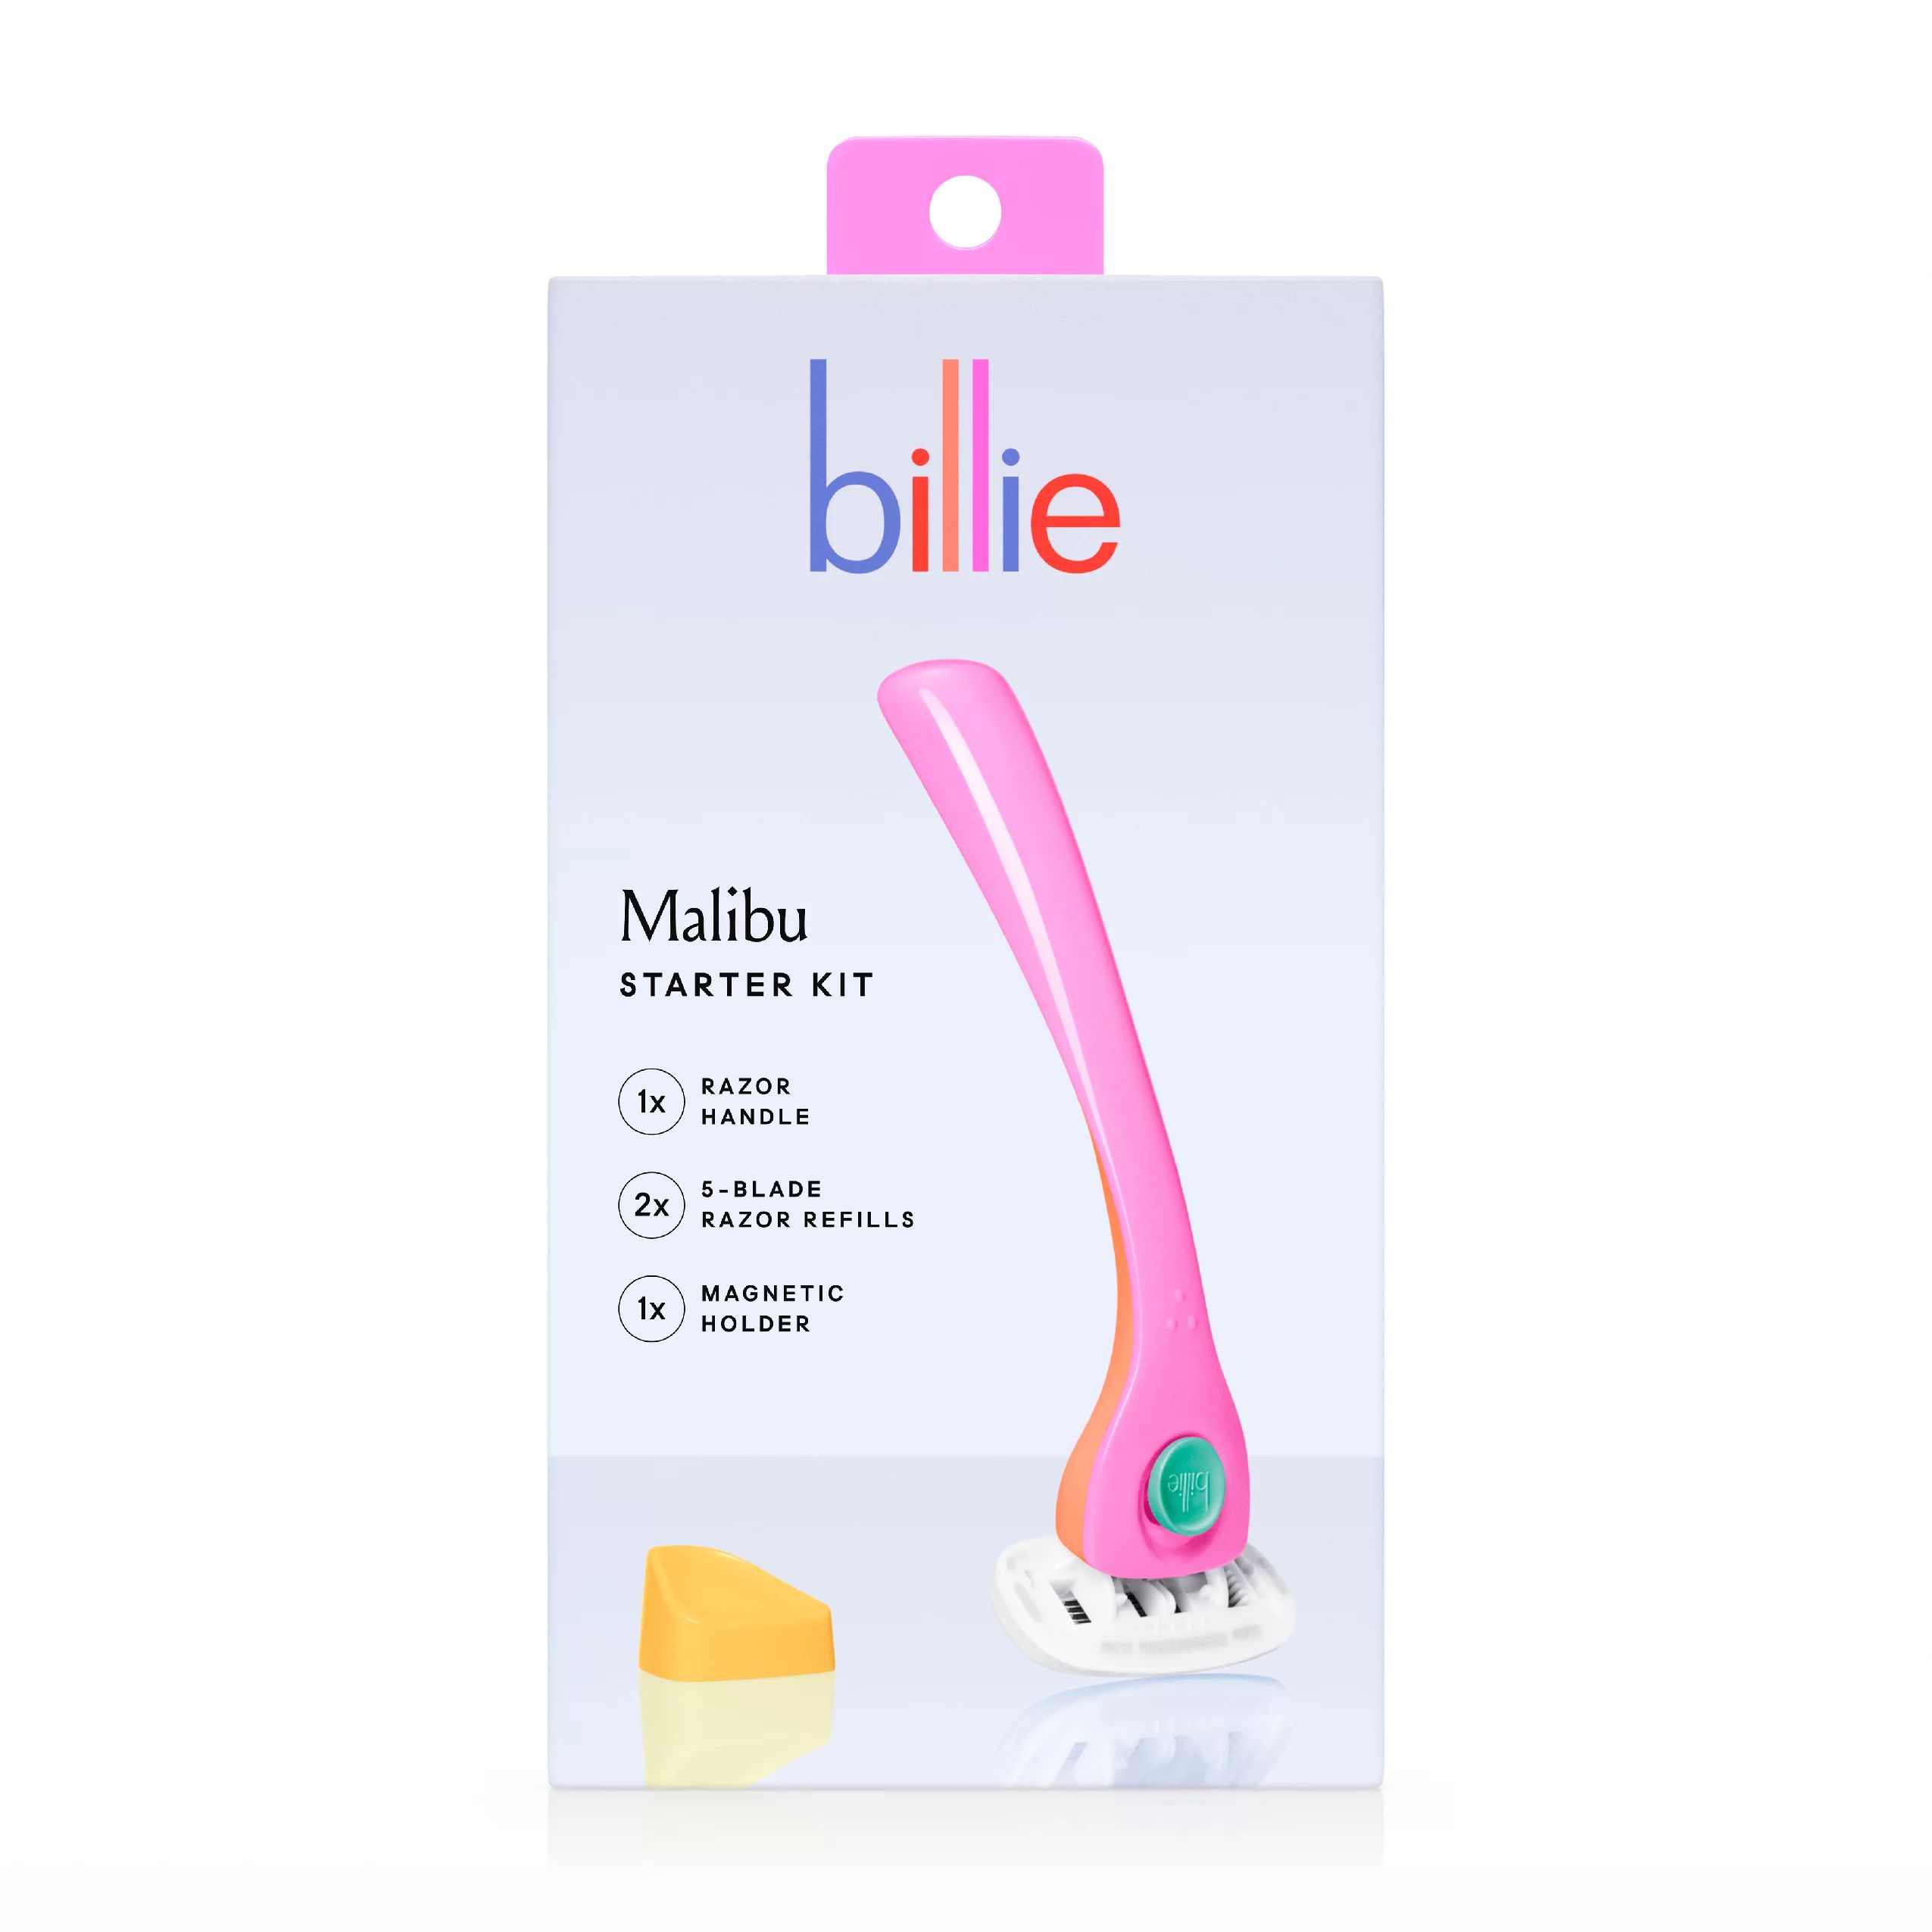 Billie Women’s Razor Kit - 1 Handle + 2 Blade Refills + Magnetic Holder - Malibu | Walmart (US)